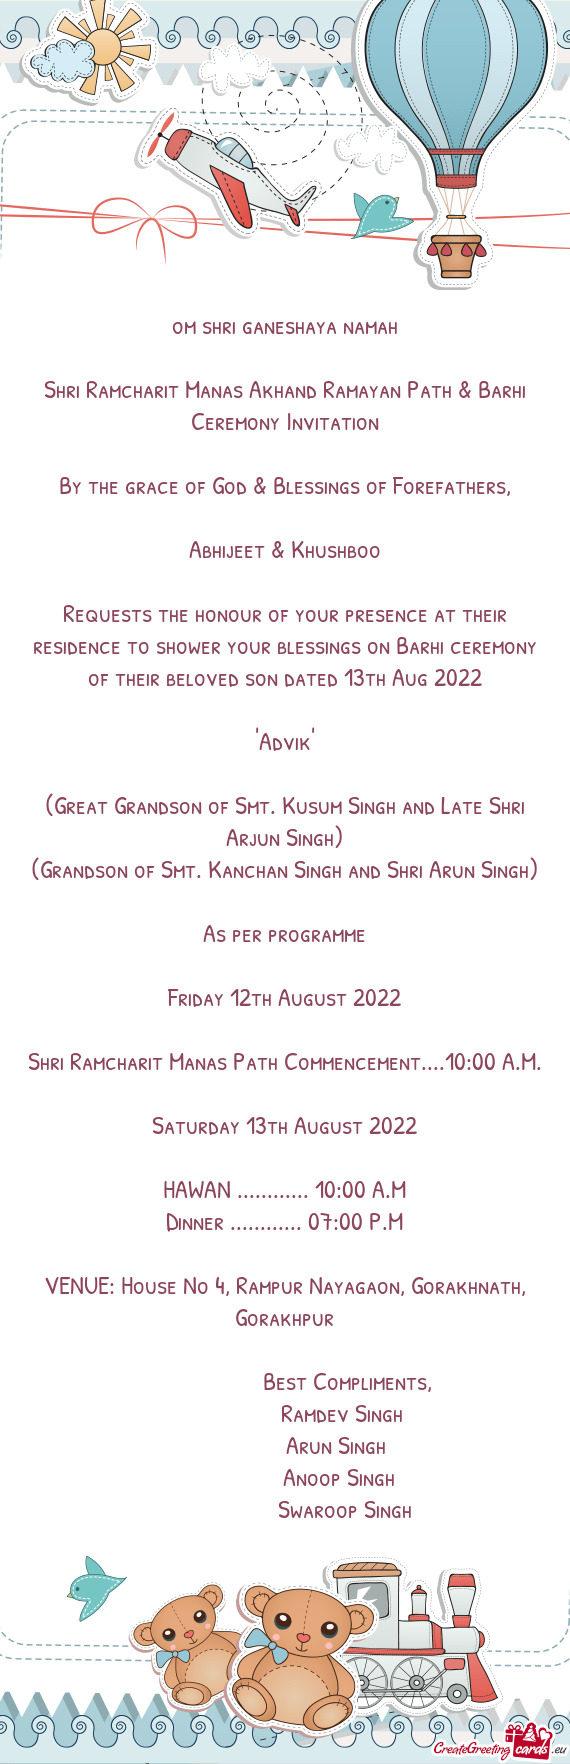 Shri Ramcharit Manas Akhand Ramayan Path & Barhi Ceremony Invitation